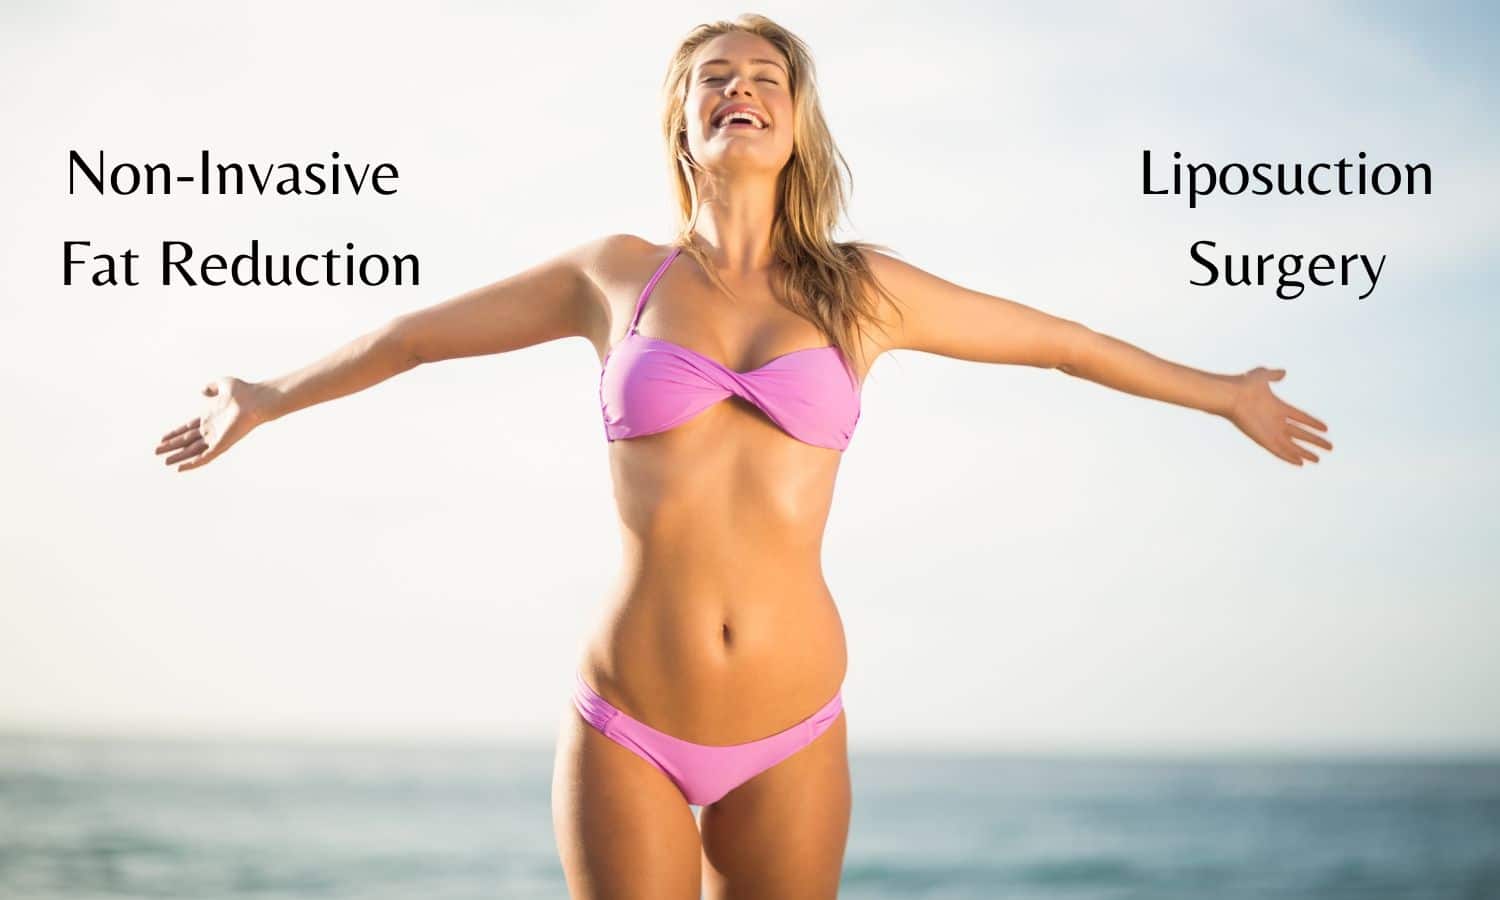 Choosing Liposuction Surgery vs. Non-Invasive Fat Reduction